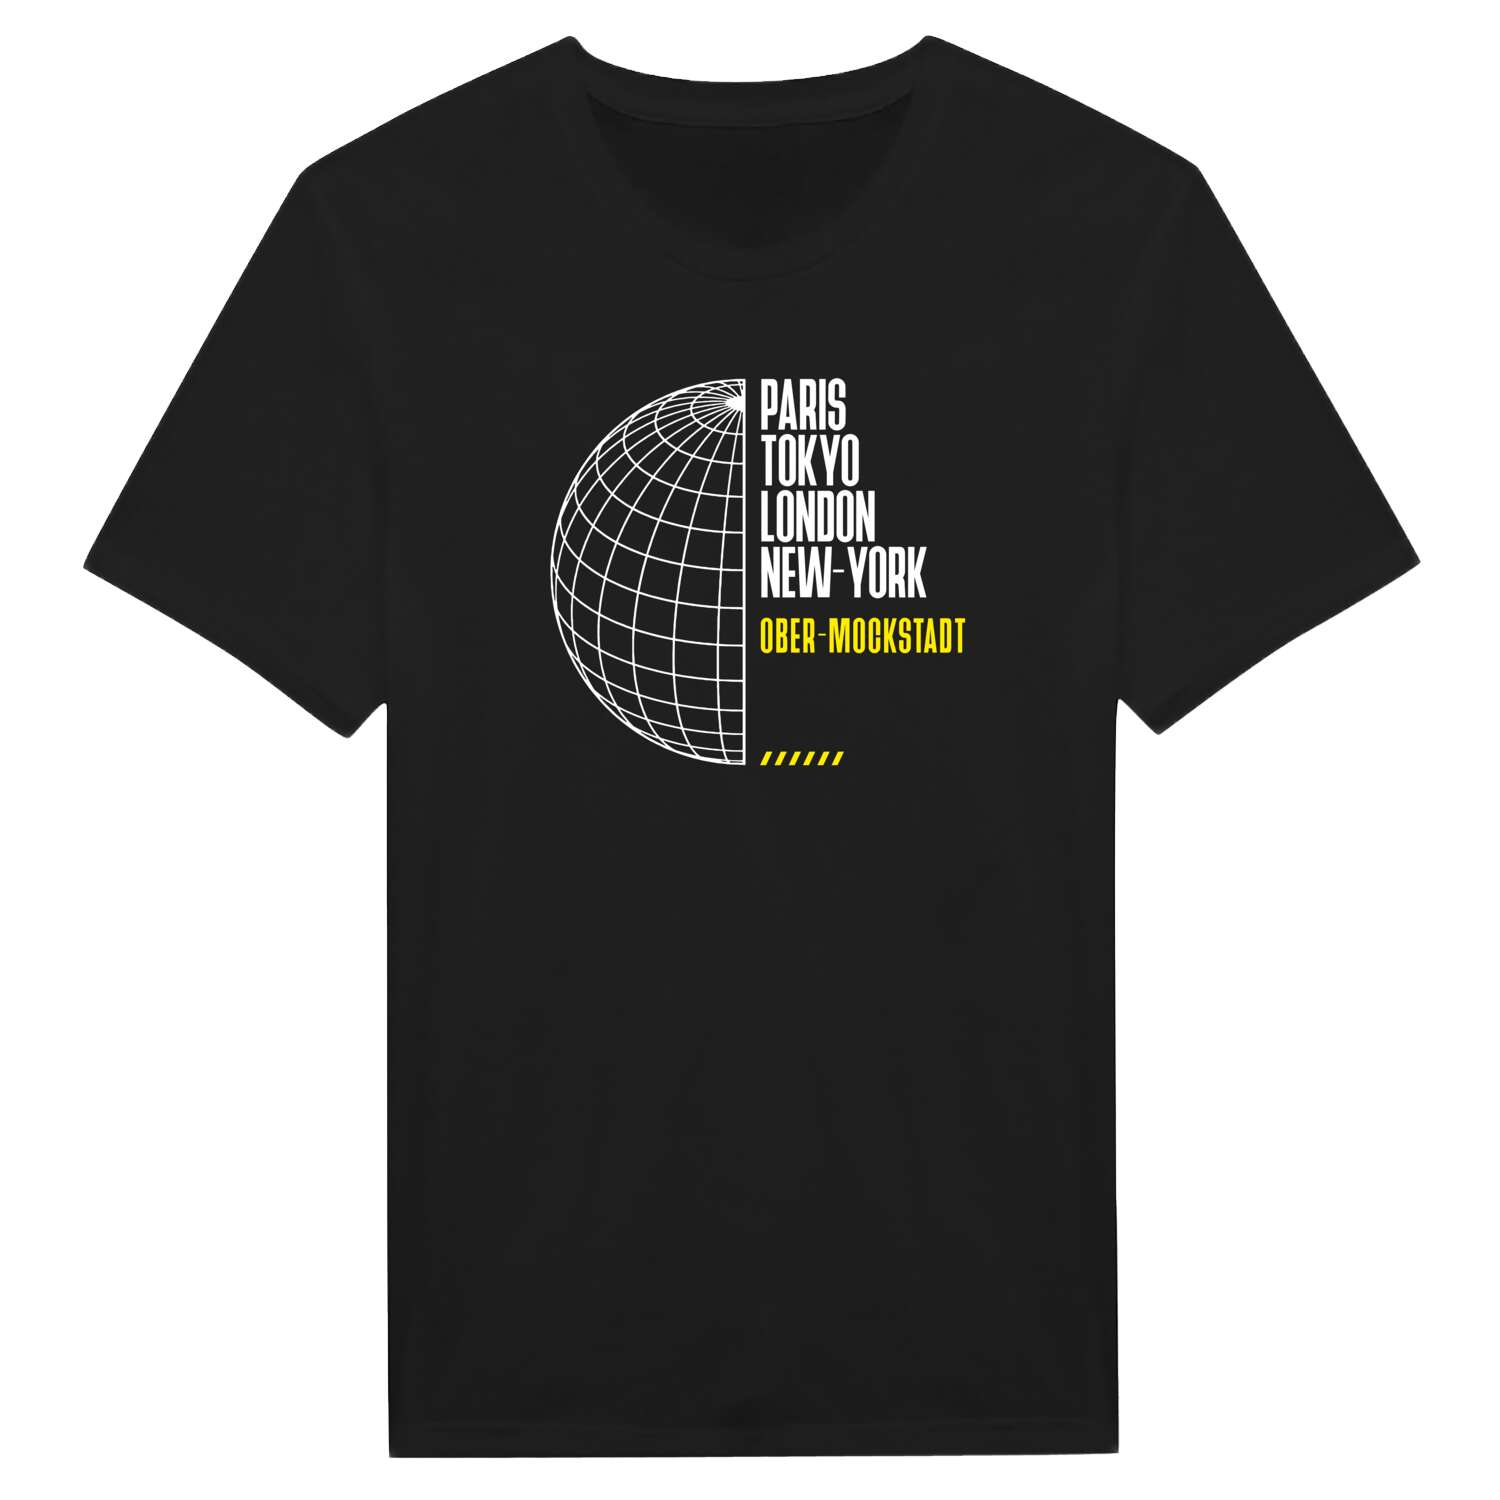 Ober-Mockstadt T-Shirt »Paris Tokyo London«